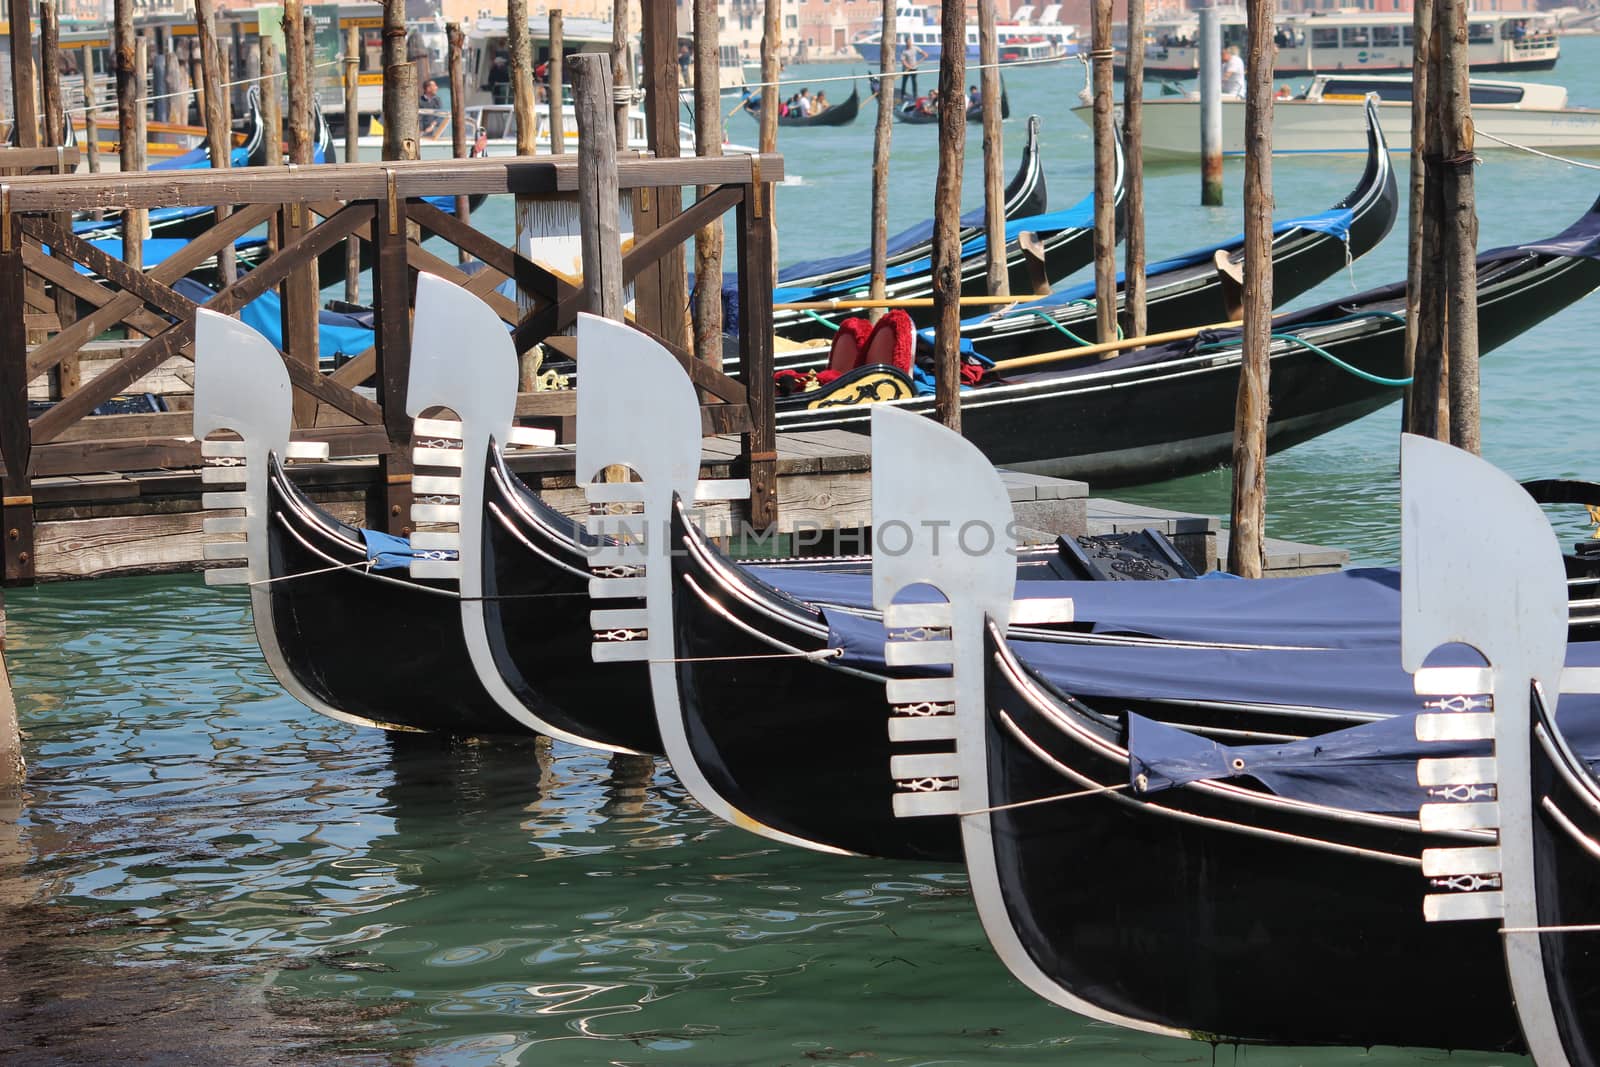 Gondolas Gondolas lined up 
on the Grand Canal in Venice, Italy